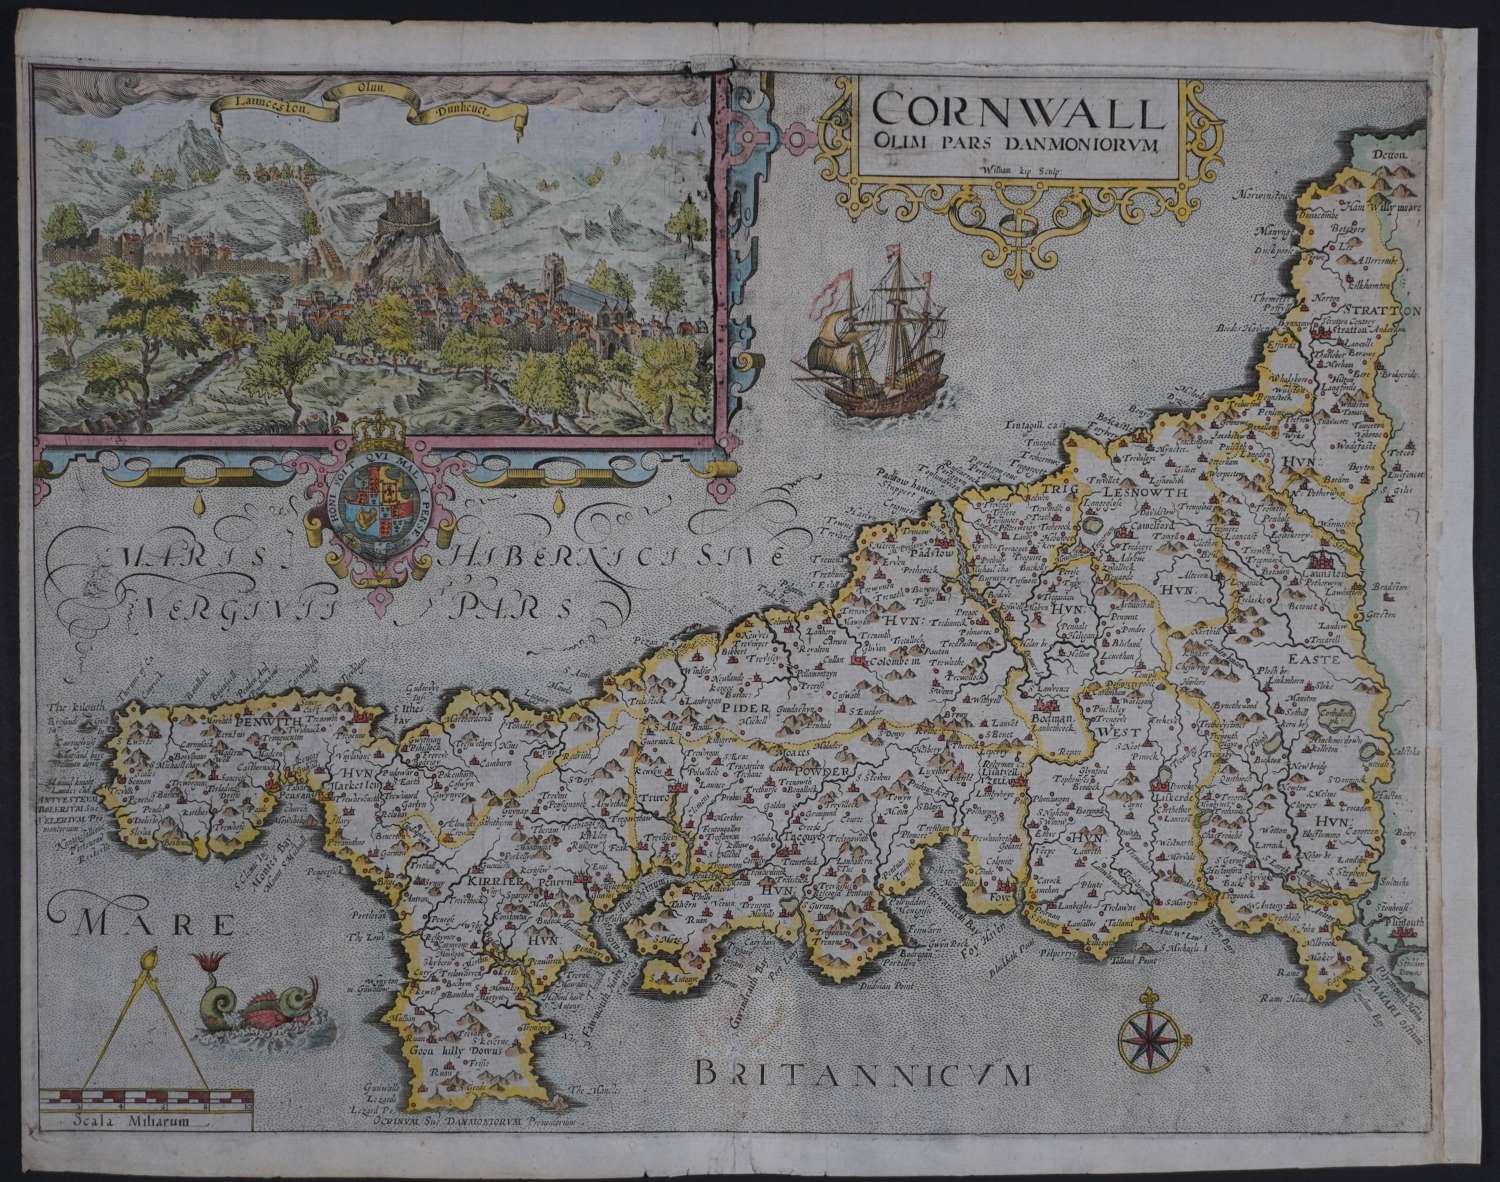 Cornwall olim pars Danmoniorum by Christopher Saxton and William Kip